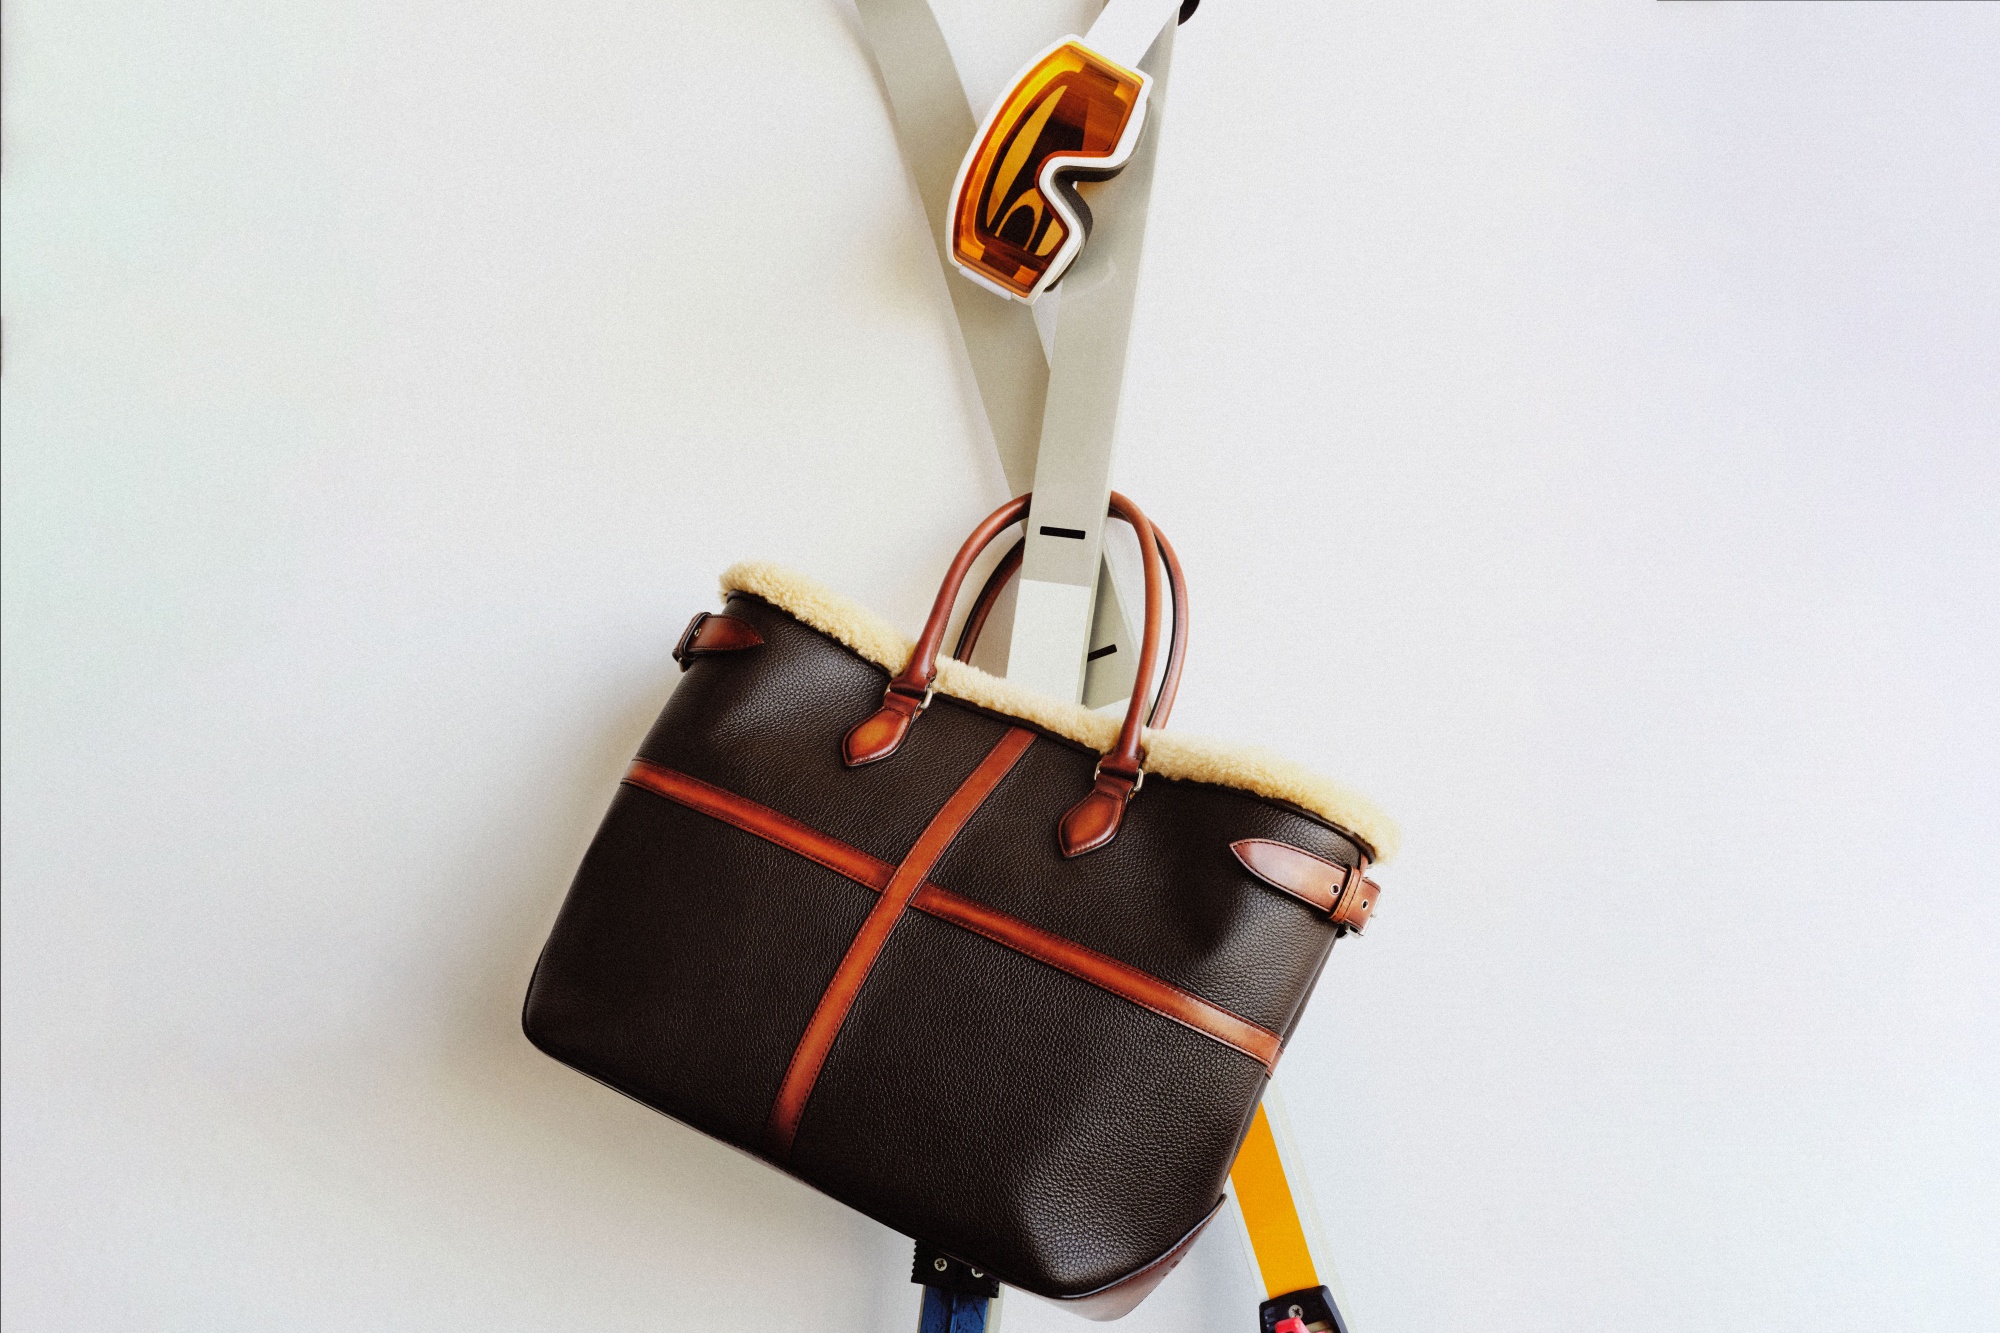 Best online shop for Handbags in Shanghai China - Perfect replica - Medium